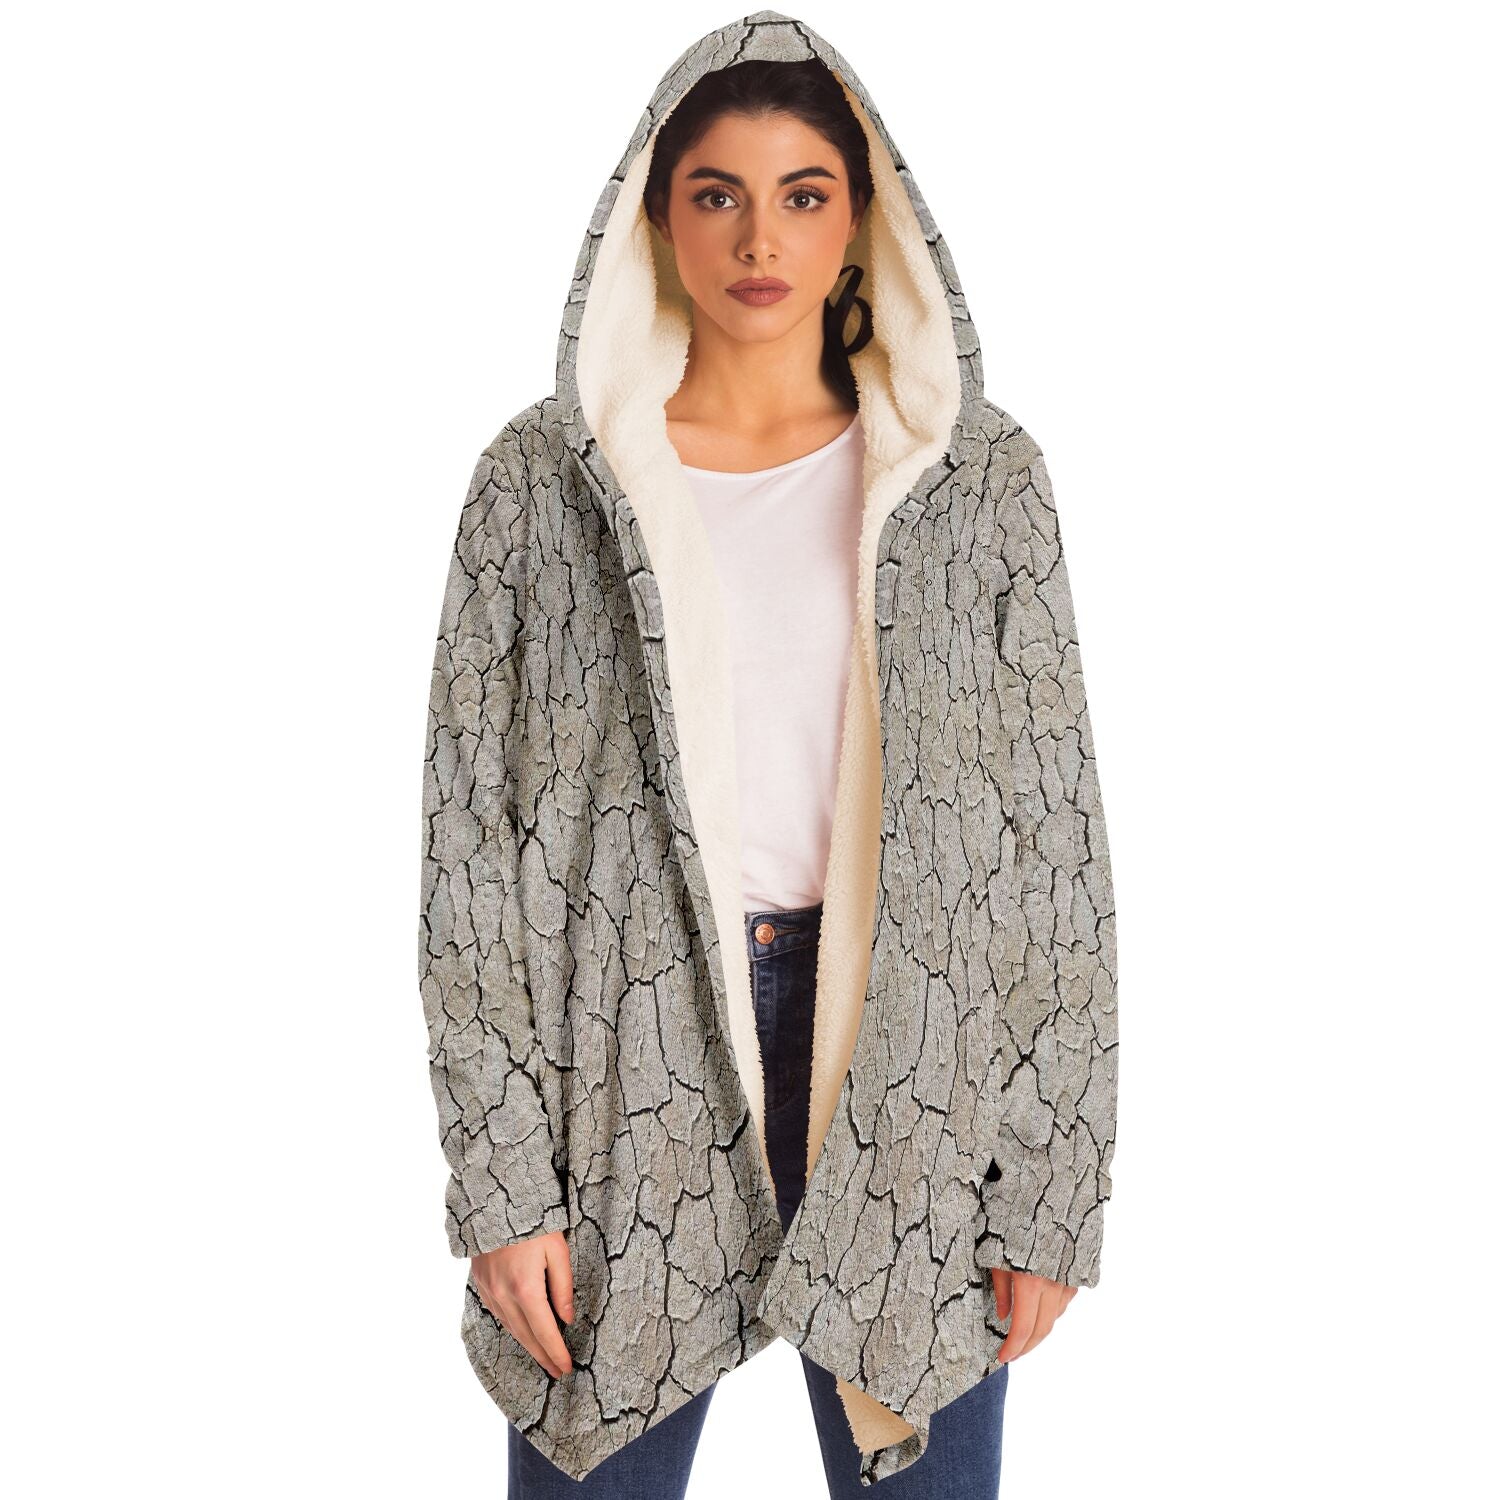 Black Rock City Cuddle Cloak | Playa Coat | Beige, Cream | Unisex Minky Sherpa Hooded Coat for Burning Man